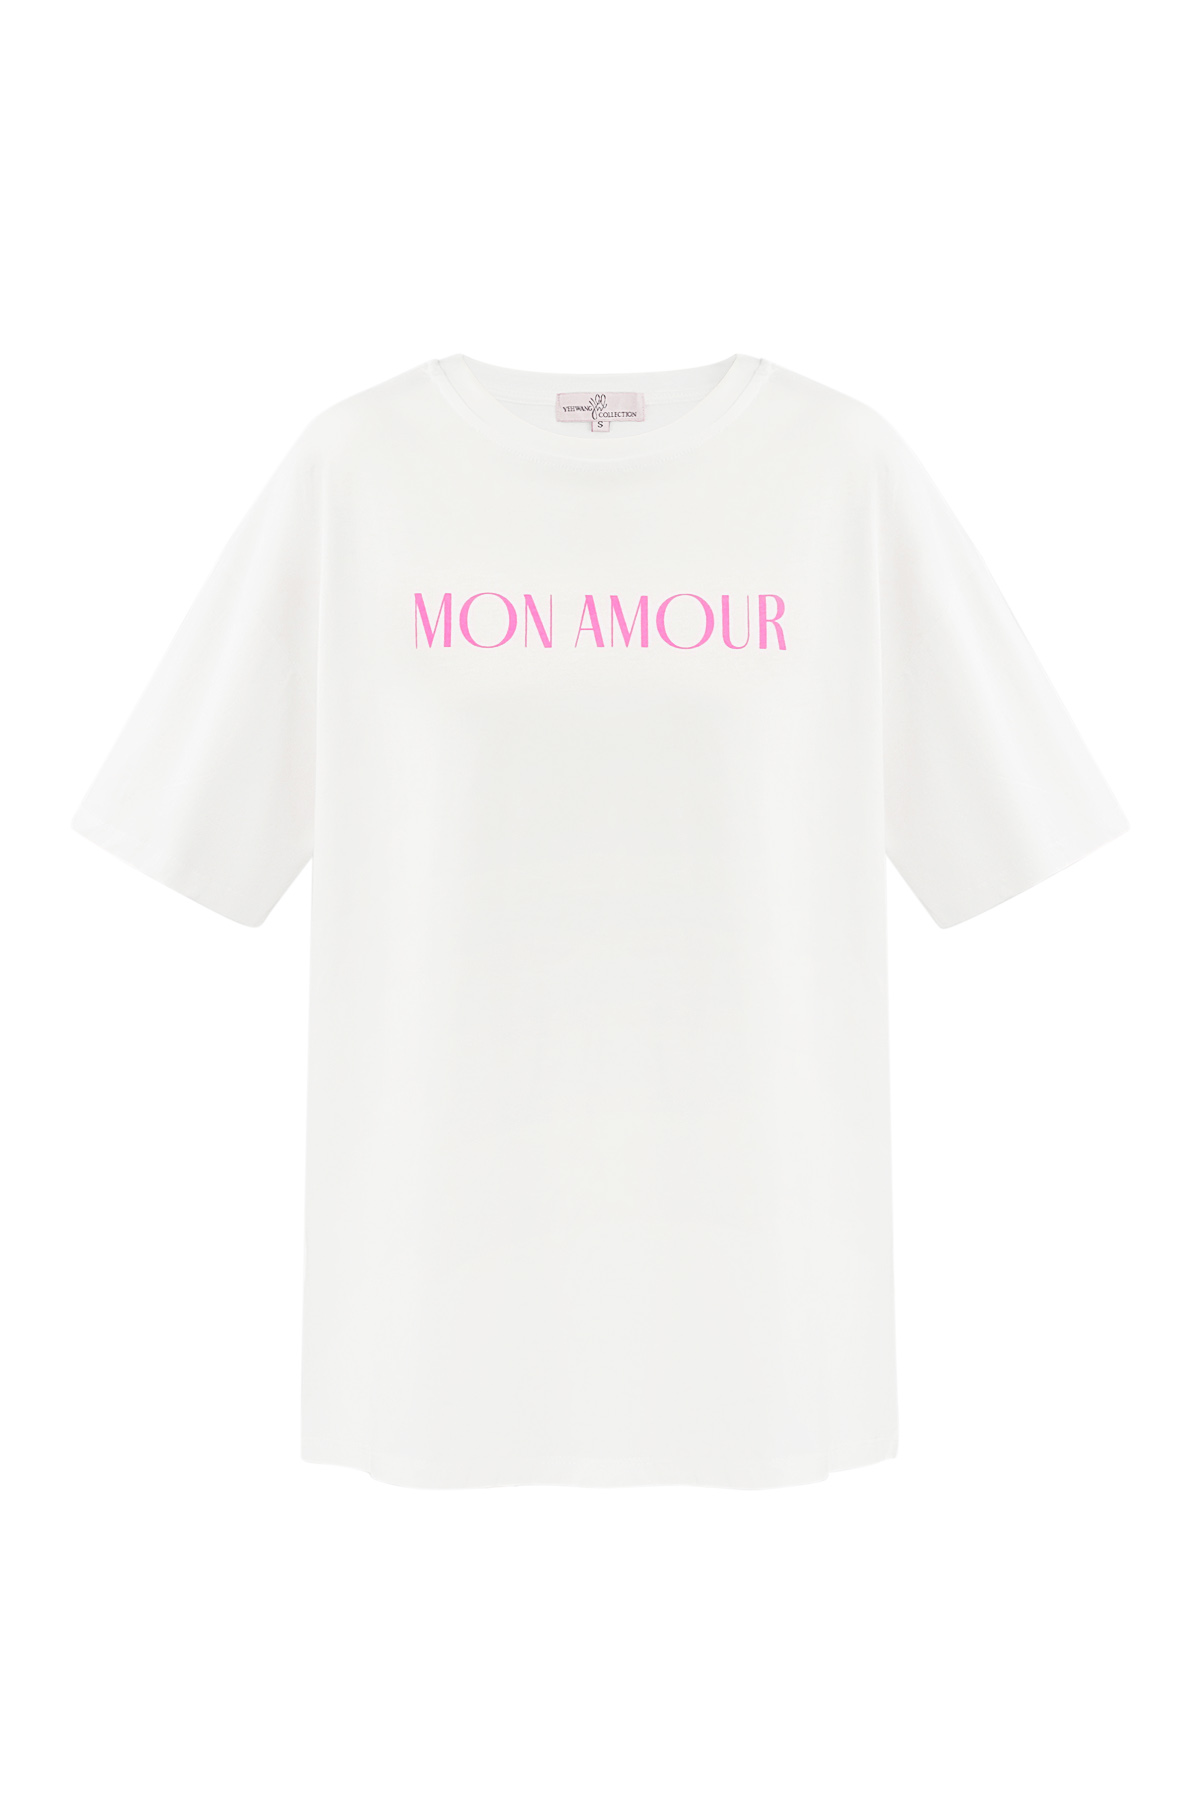 T-shirt mon amour - white h5 